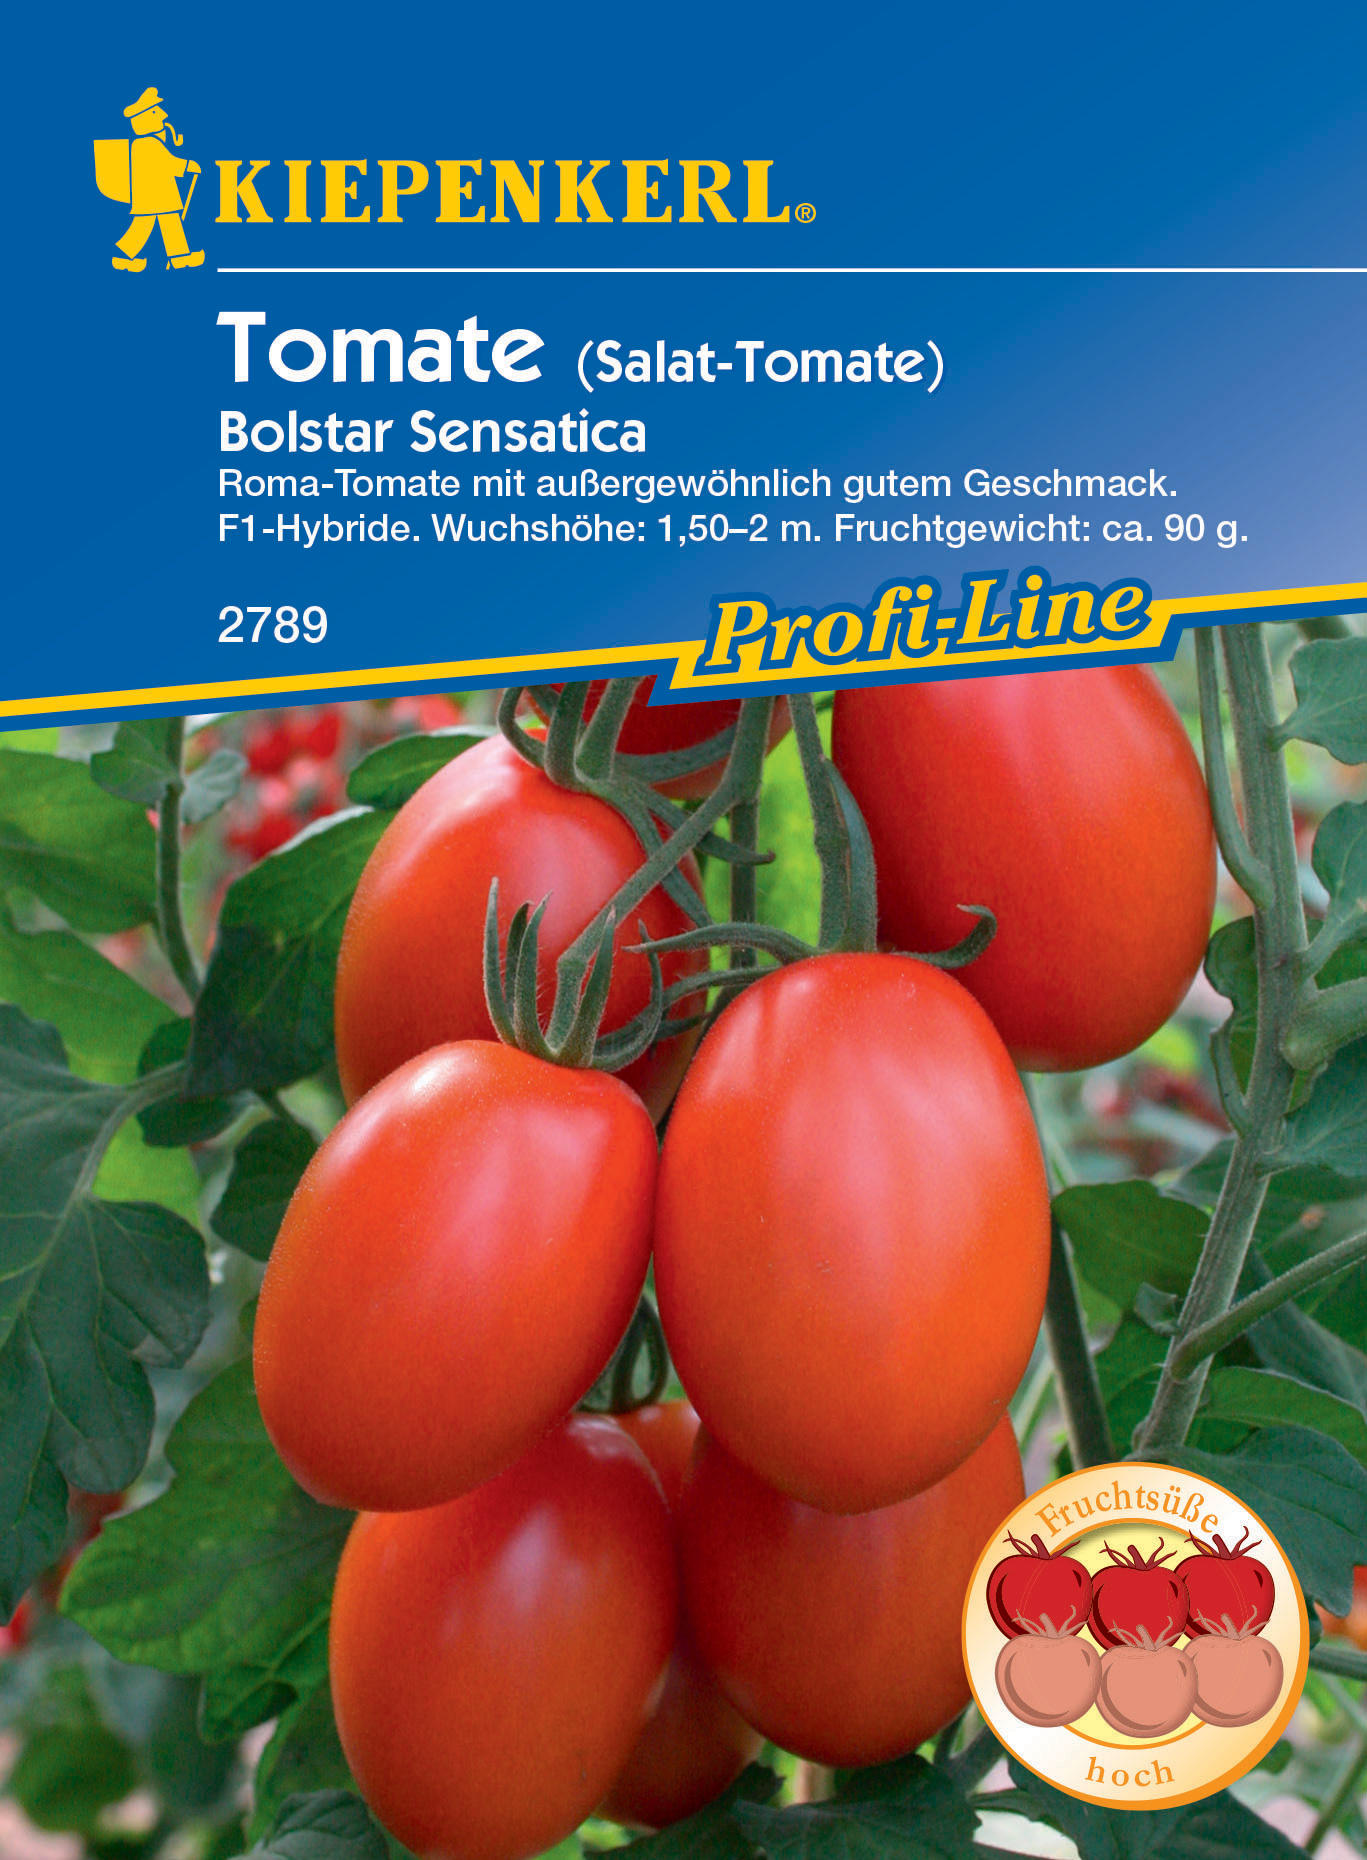 Salat-Tomate Bolstar Sensatica, F1